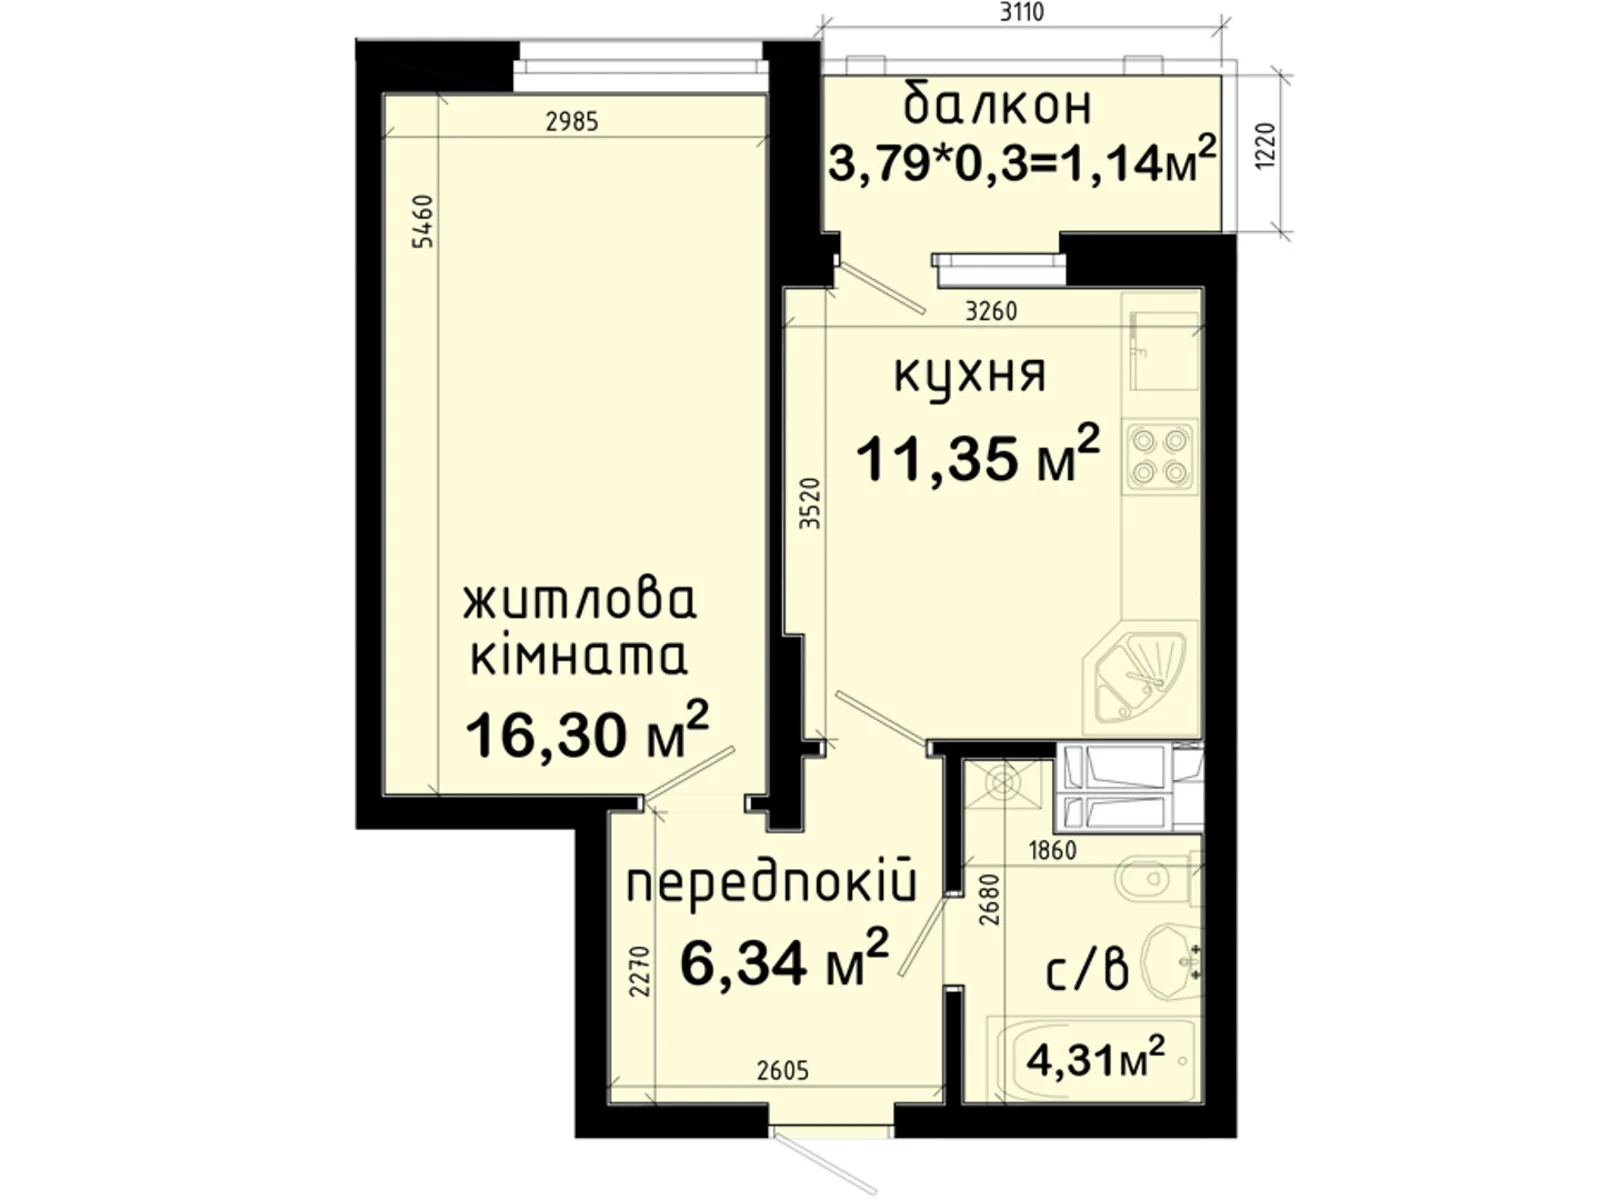 Продается 1-комнатная квартира 39.44 кв. м в Киеве, просп. Академика Глушкова, 42